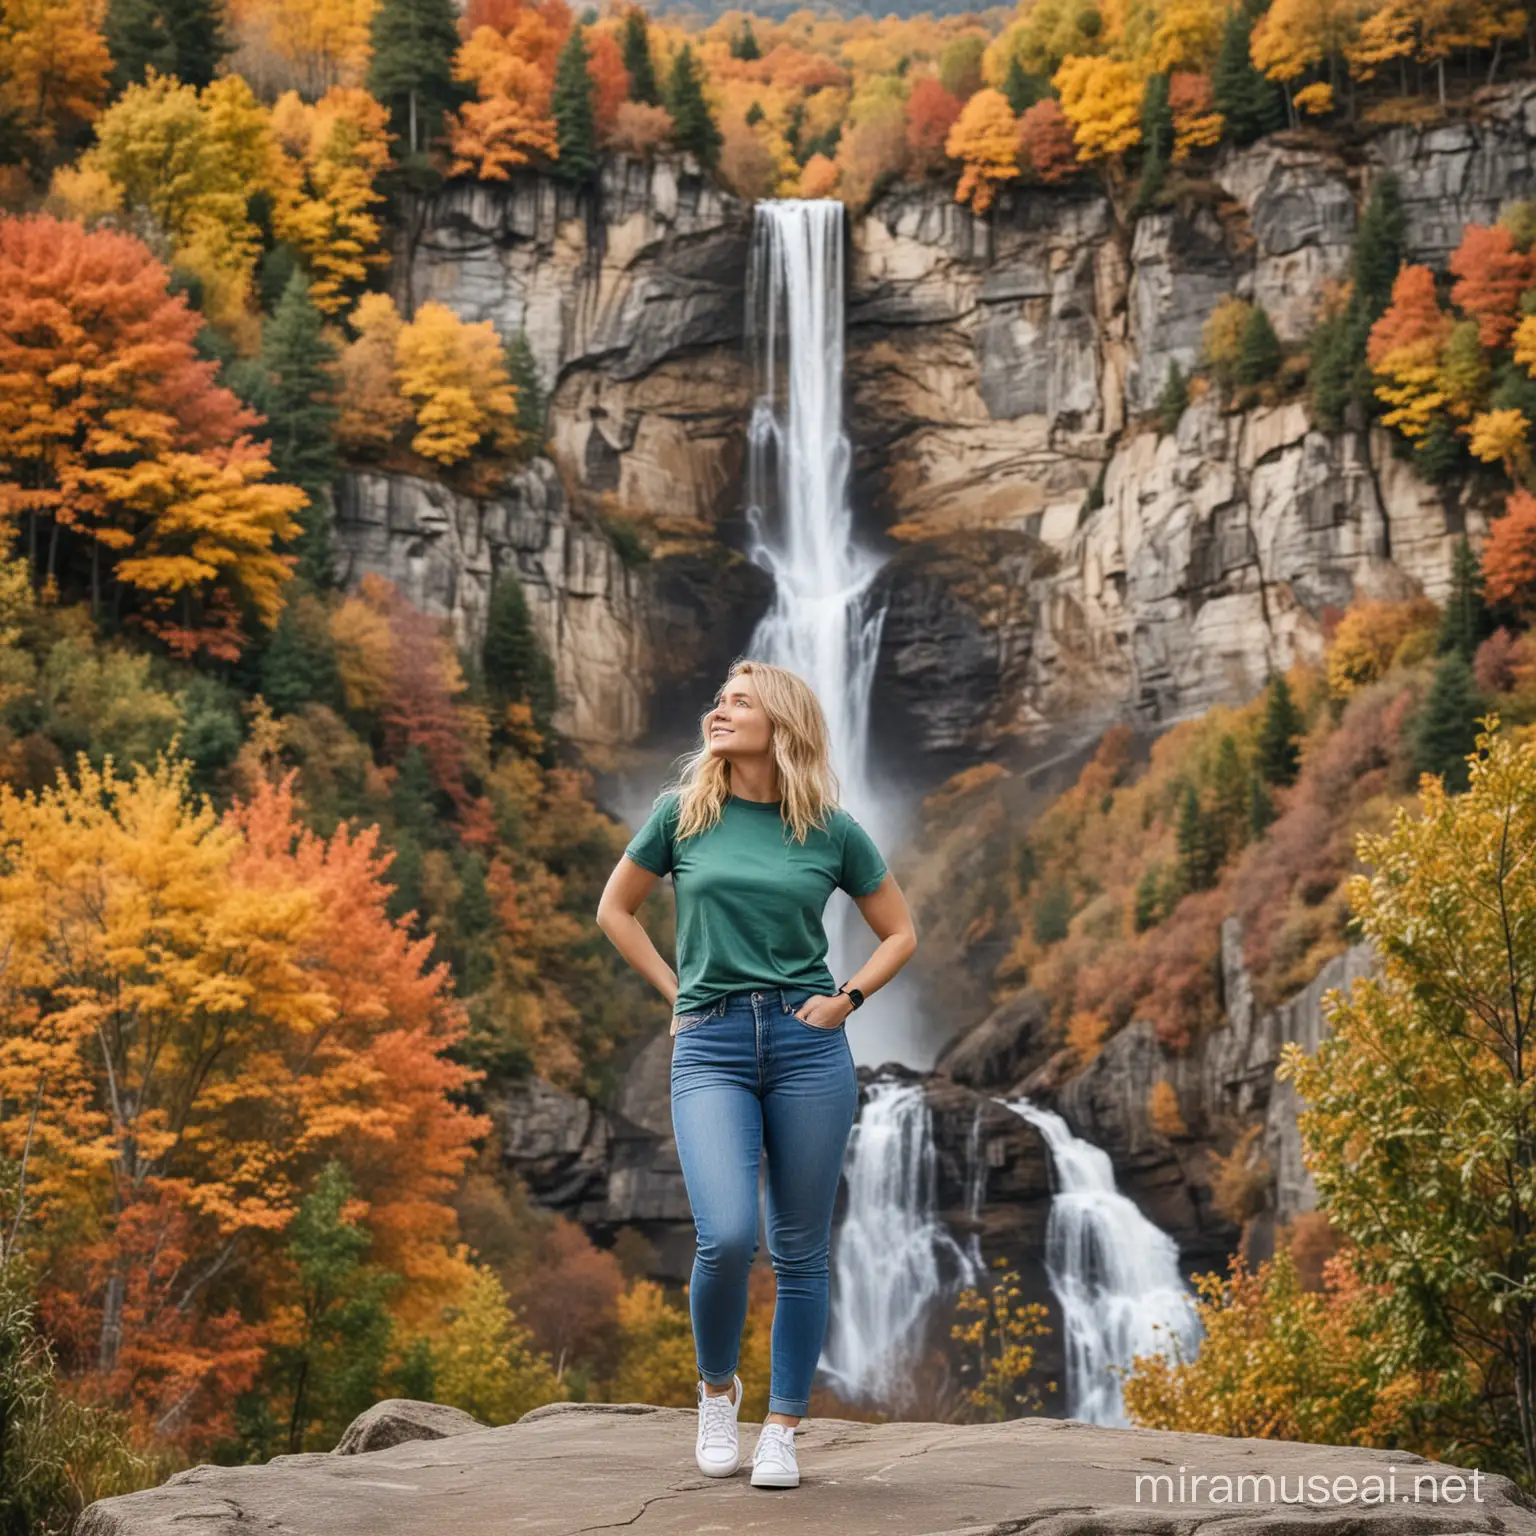 Blonde Woman in Green TShirt Admiring Autumn Waterfall at Mountain Overlook